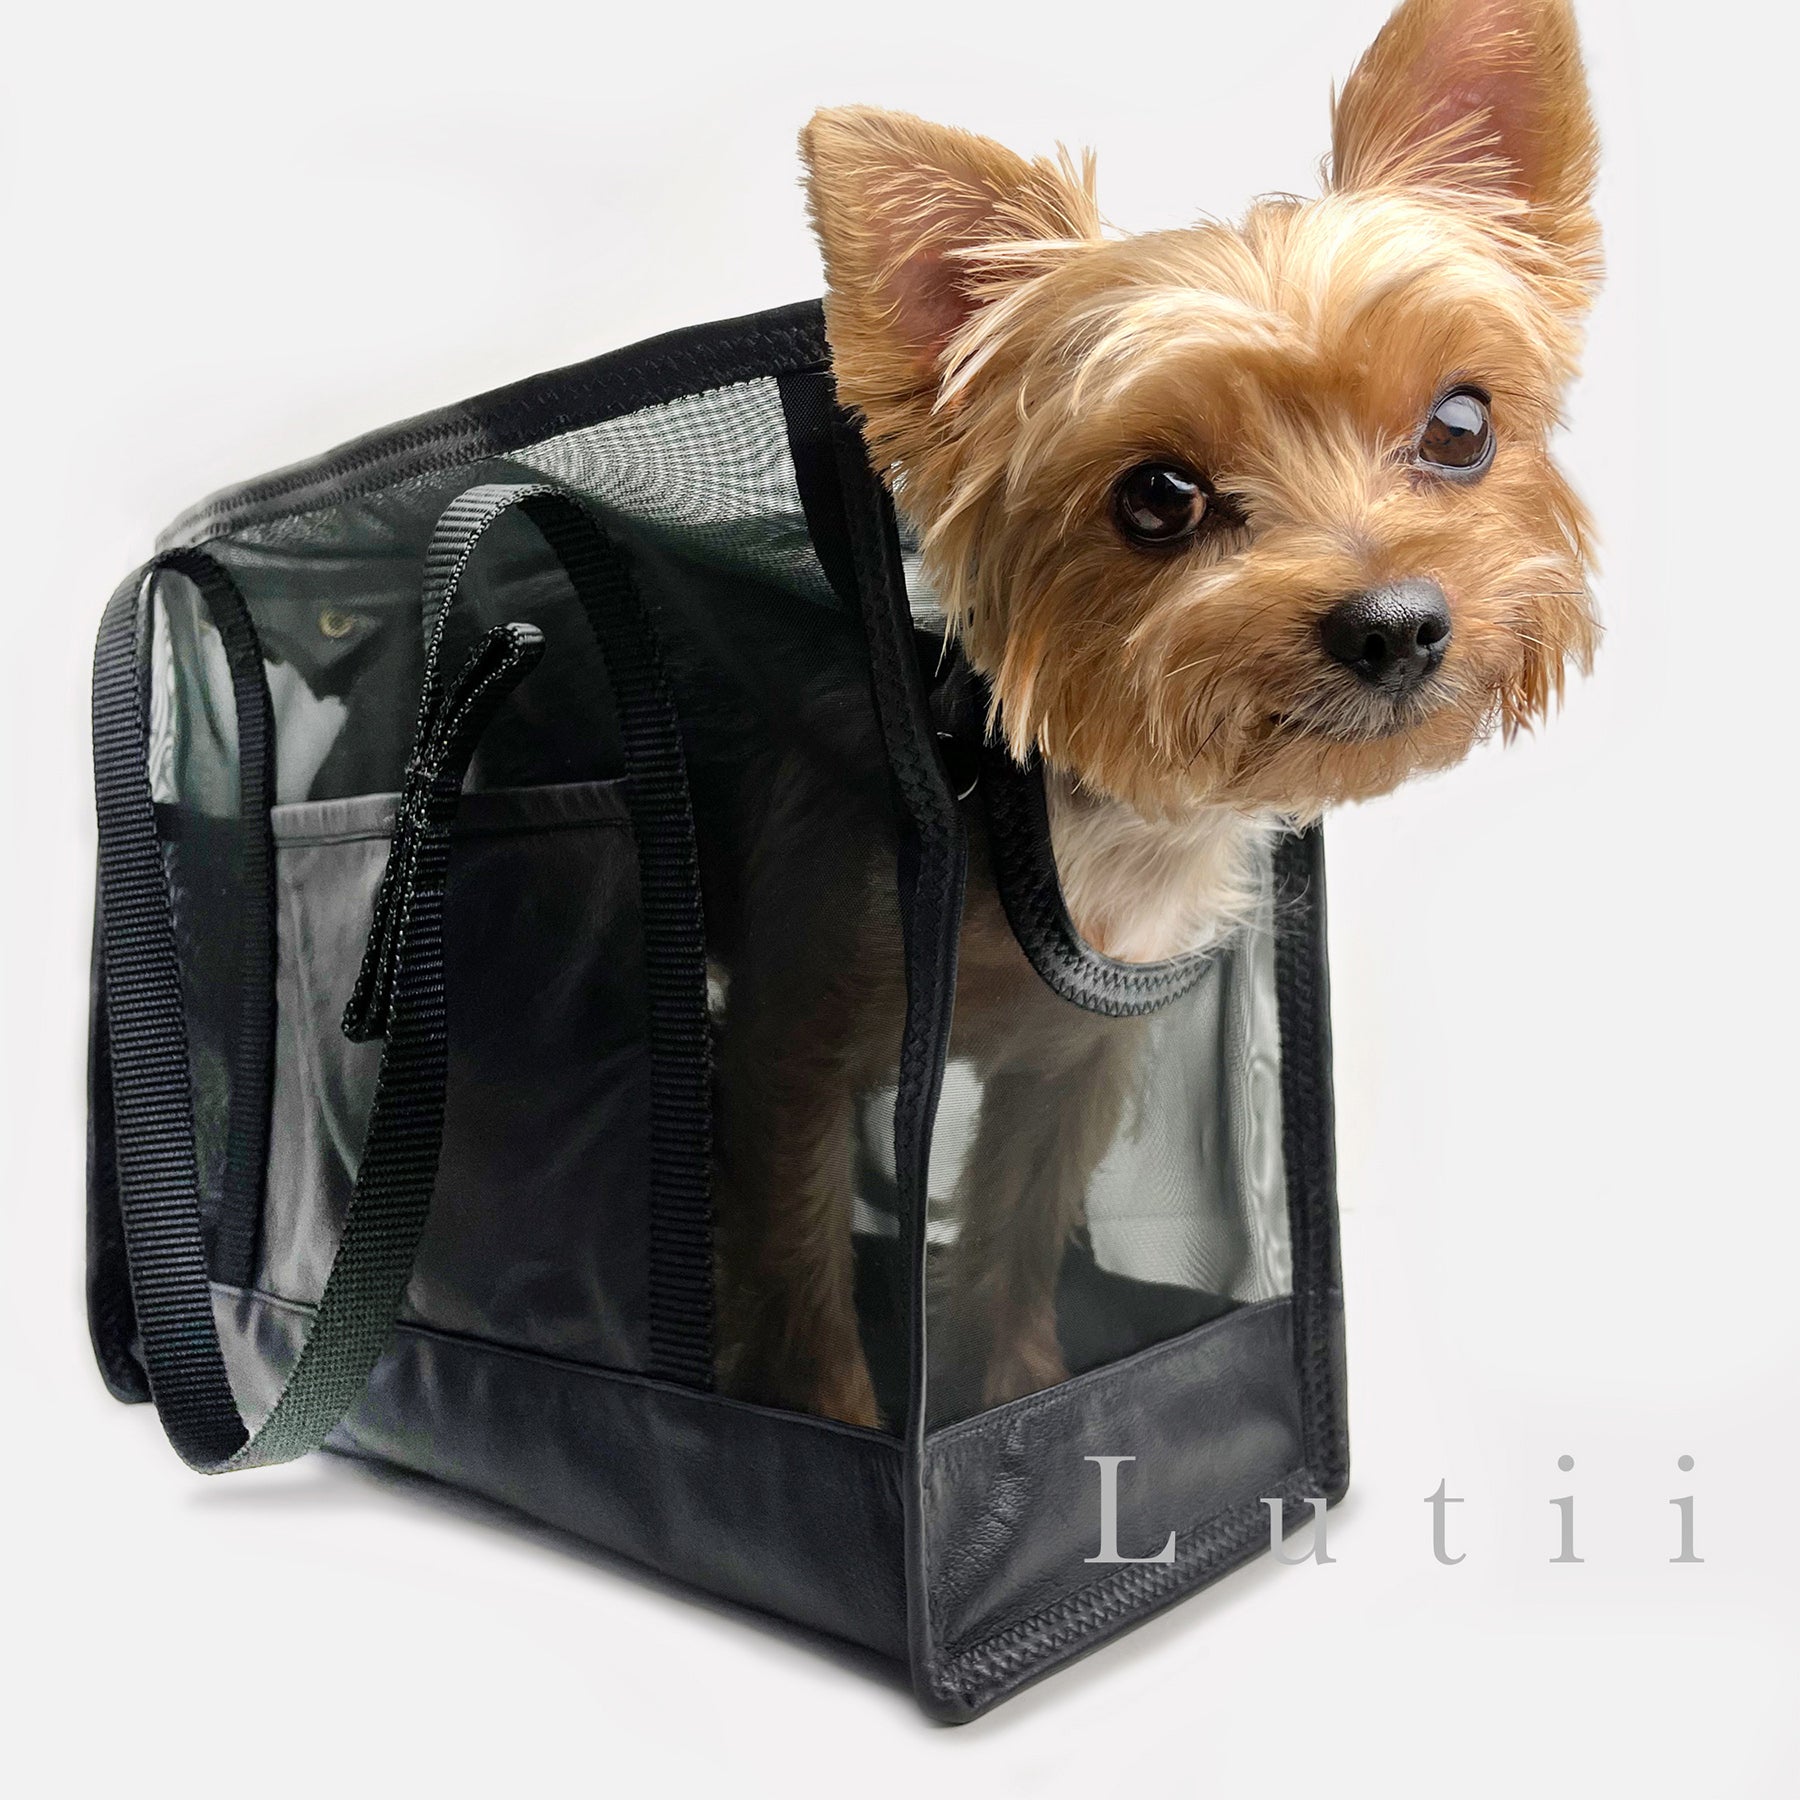 Dog carrier, dog tote bag, pet carrier, best dog carrier, airy